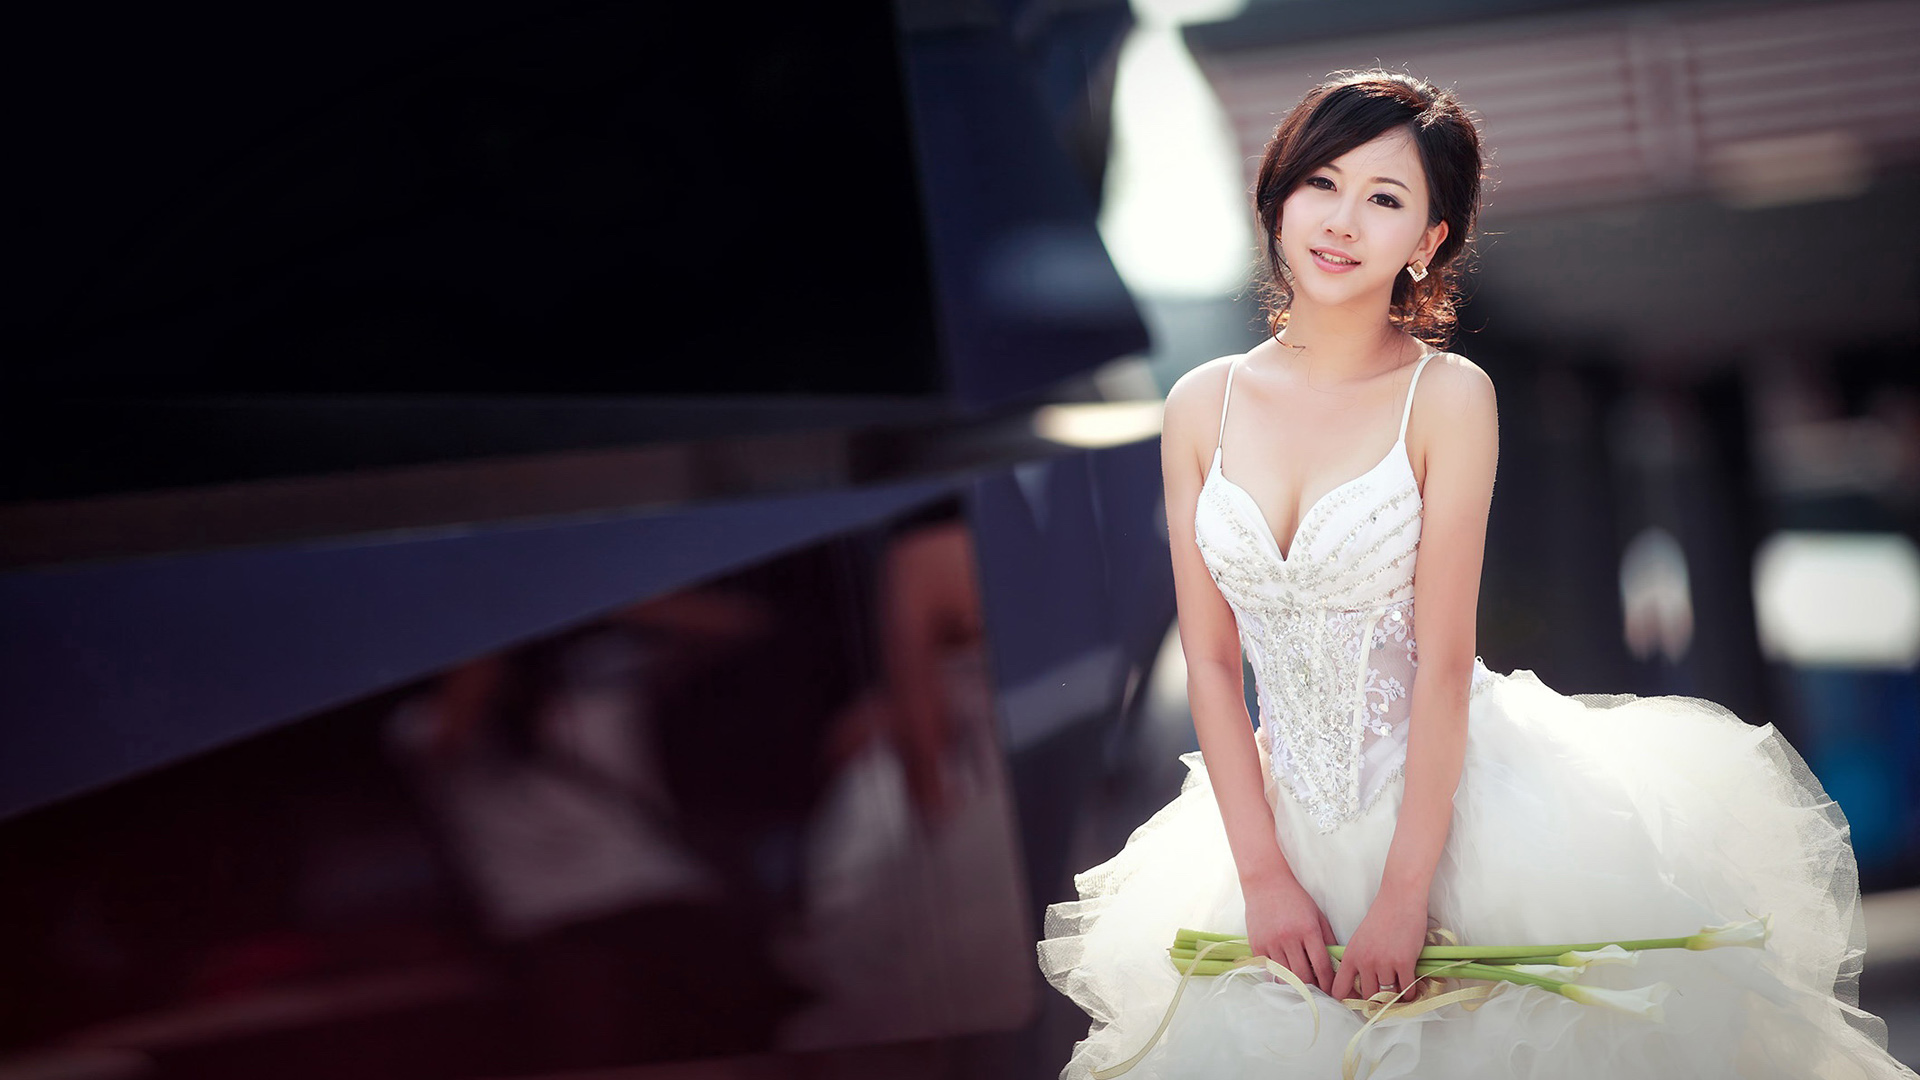 People 1920x1080 women model photography Asian wedding dress dress brides cleavage brunette portrait